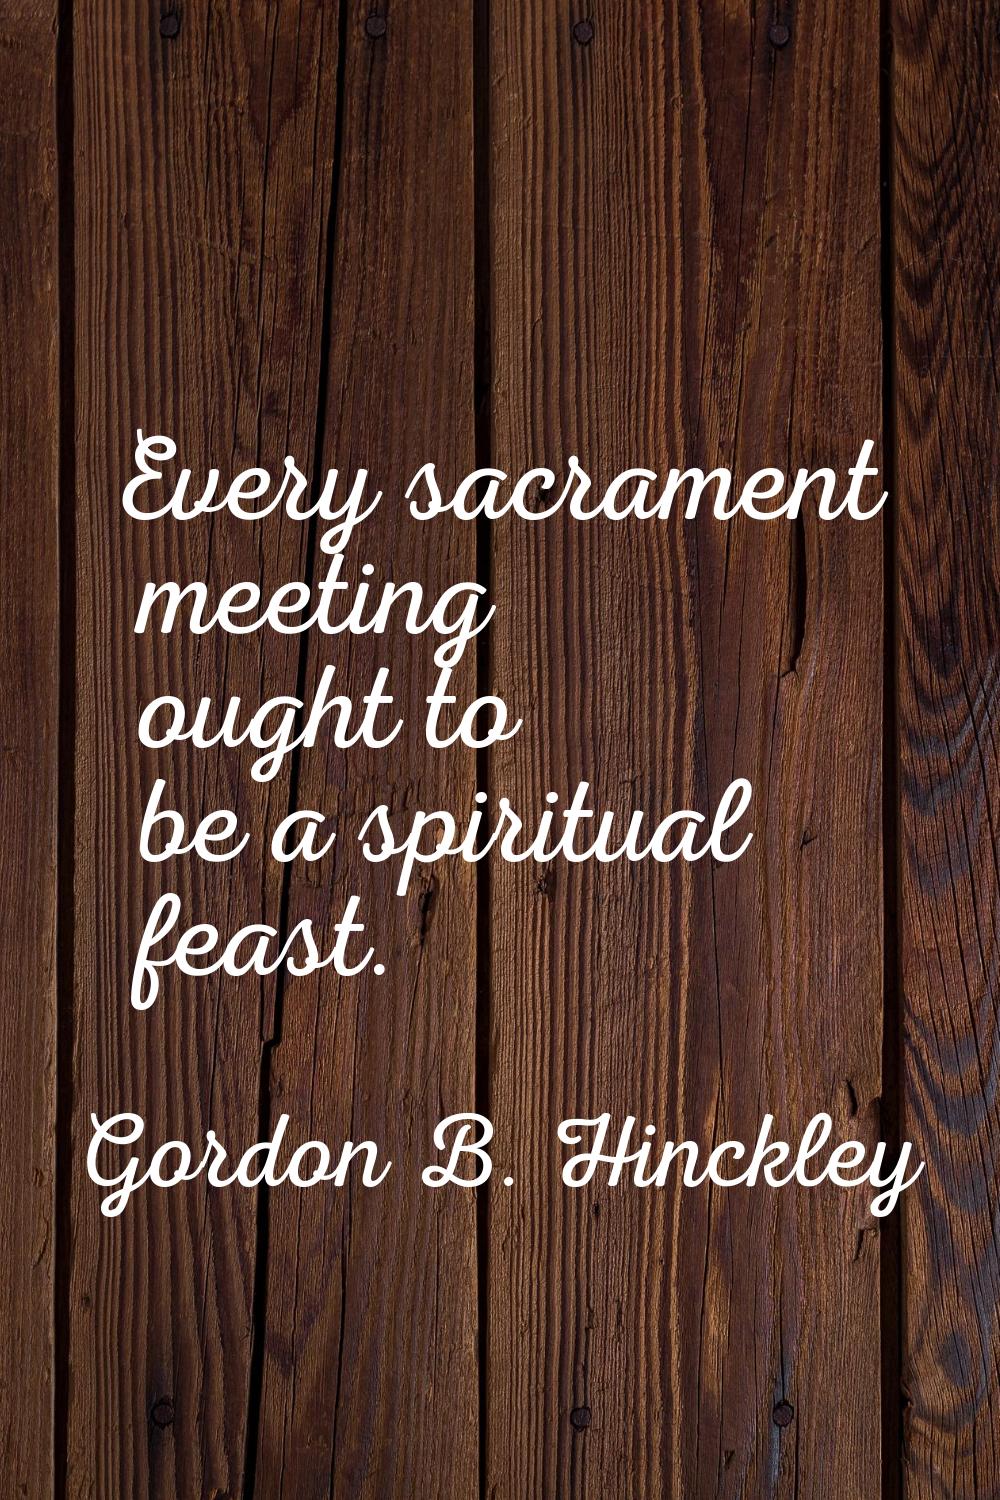 Every sacrament meeting ought to be a spiritual feast.